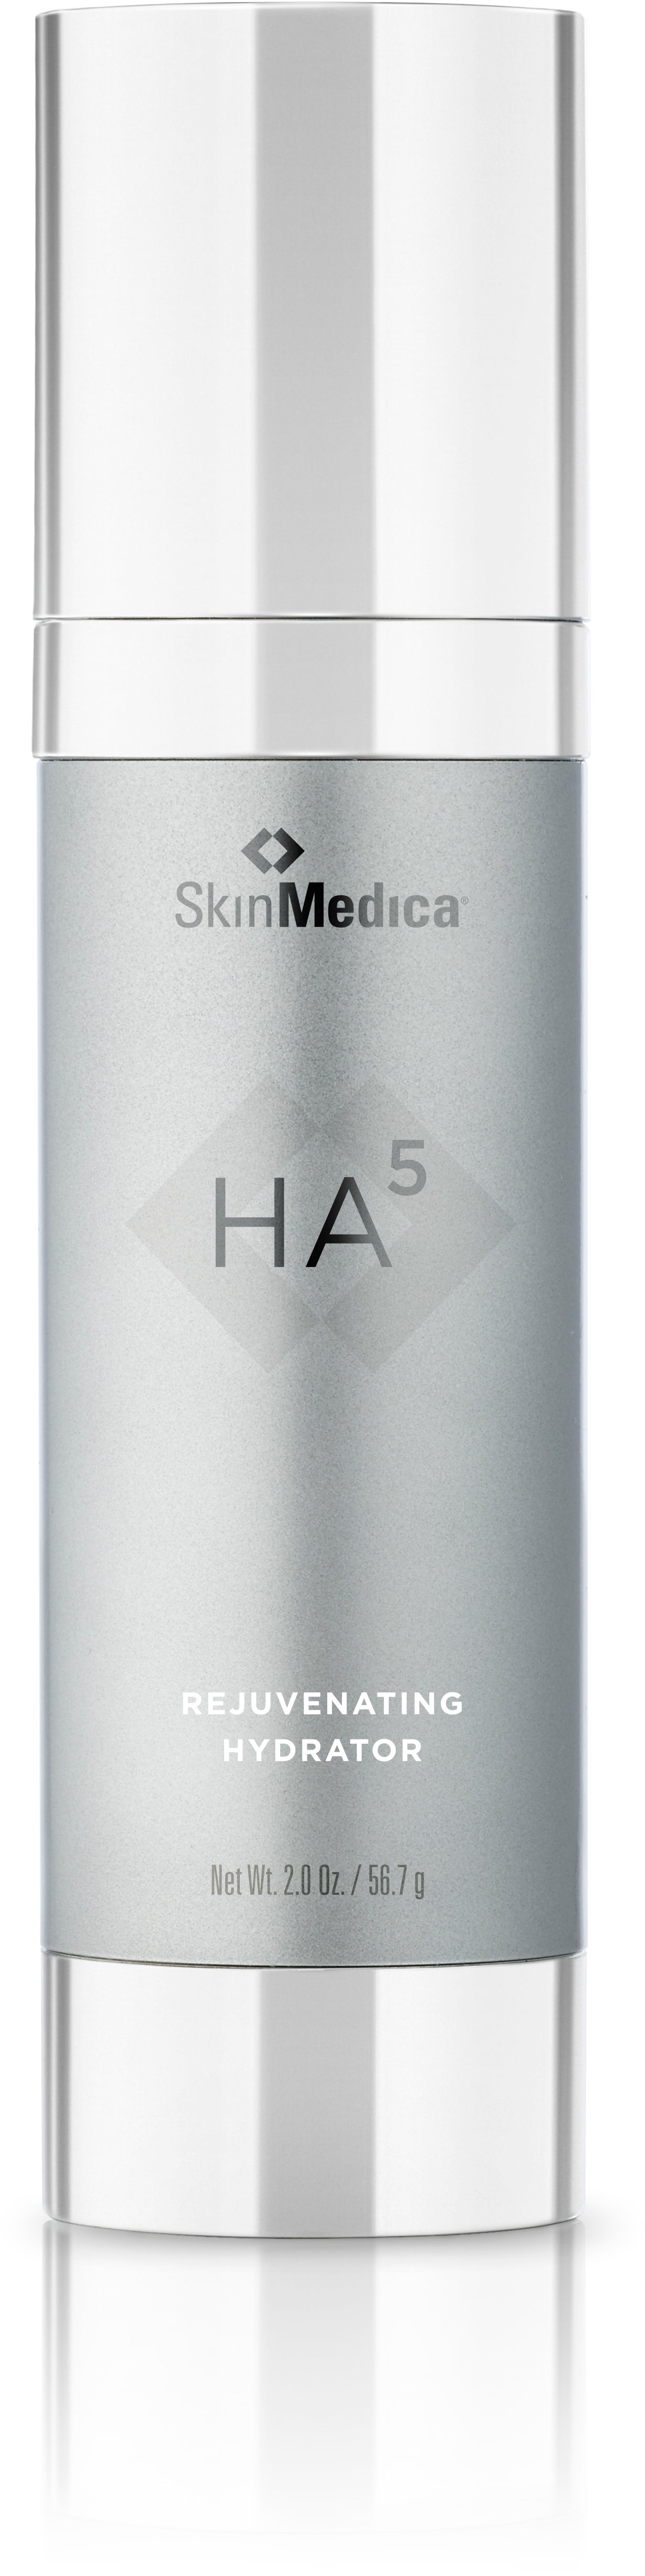 HA 5 Rejuvenating Hydrator 2oz